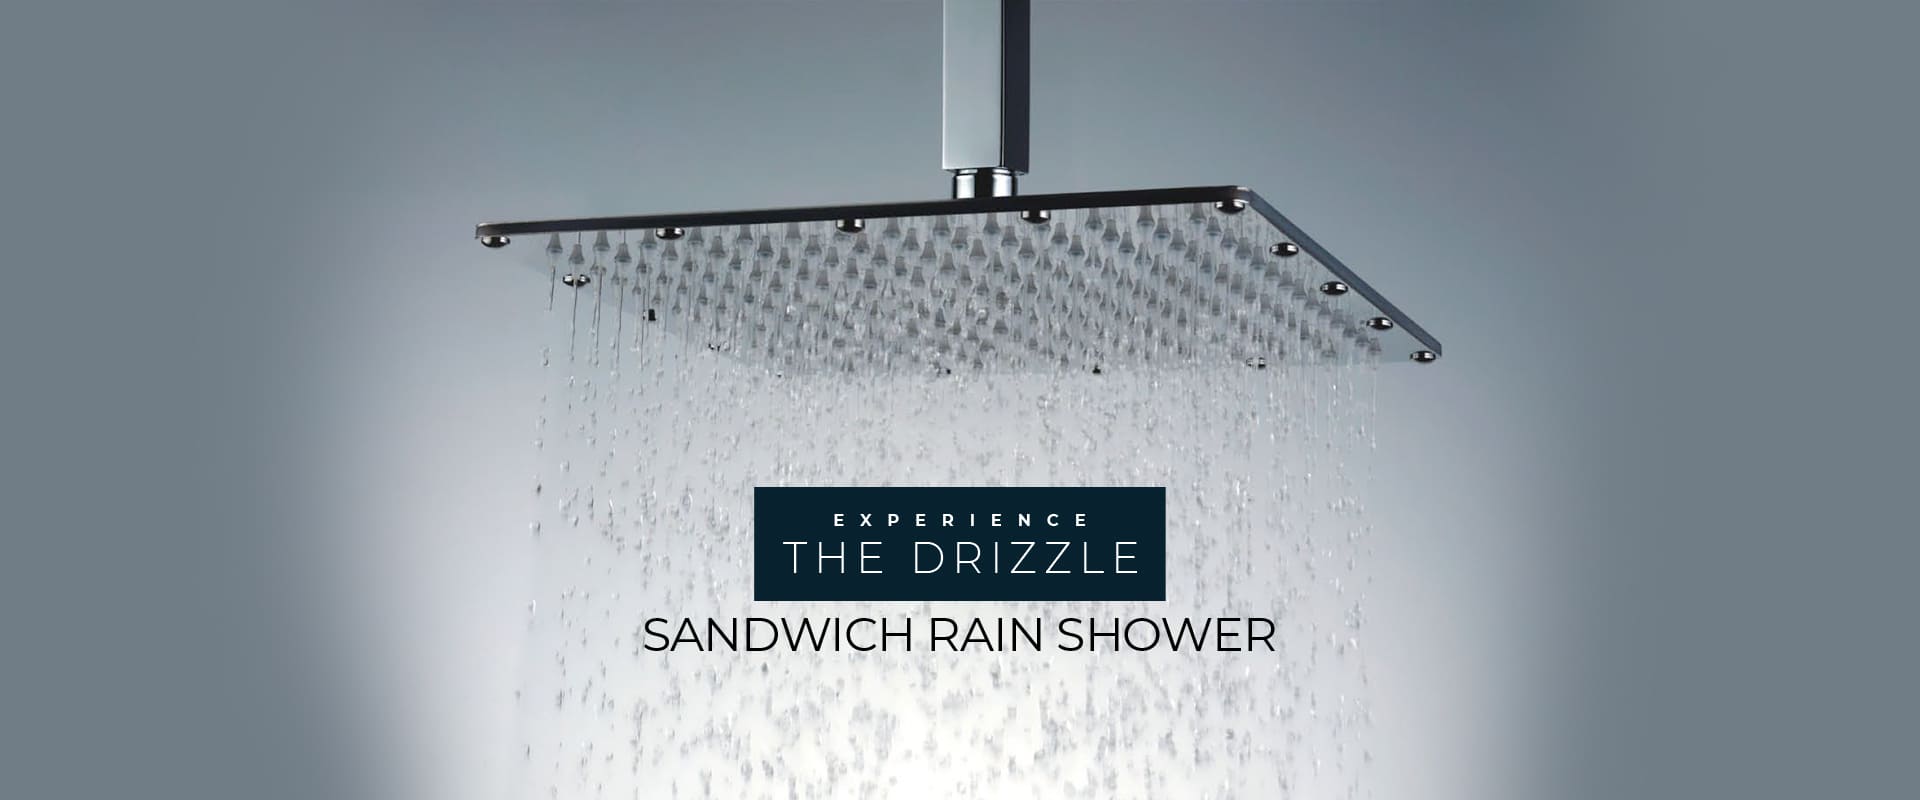 gravity-bath-sandwich-rain-shower-banner